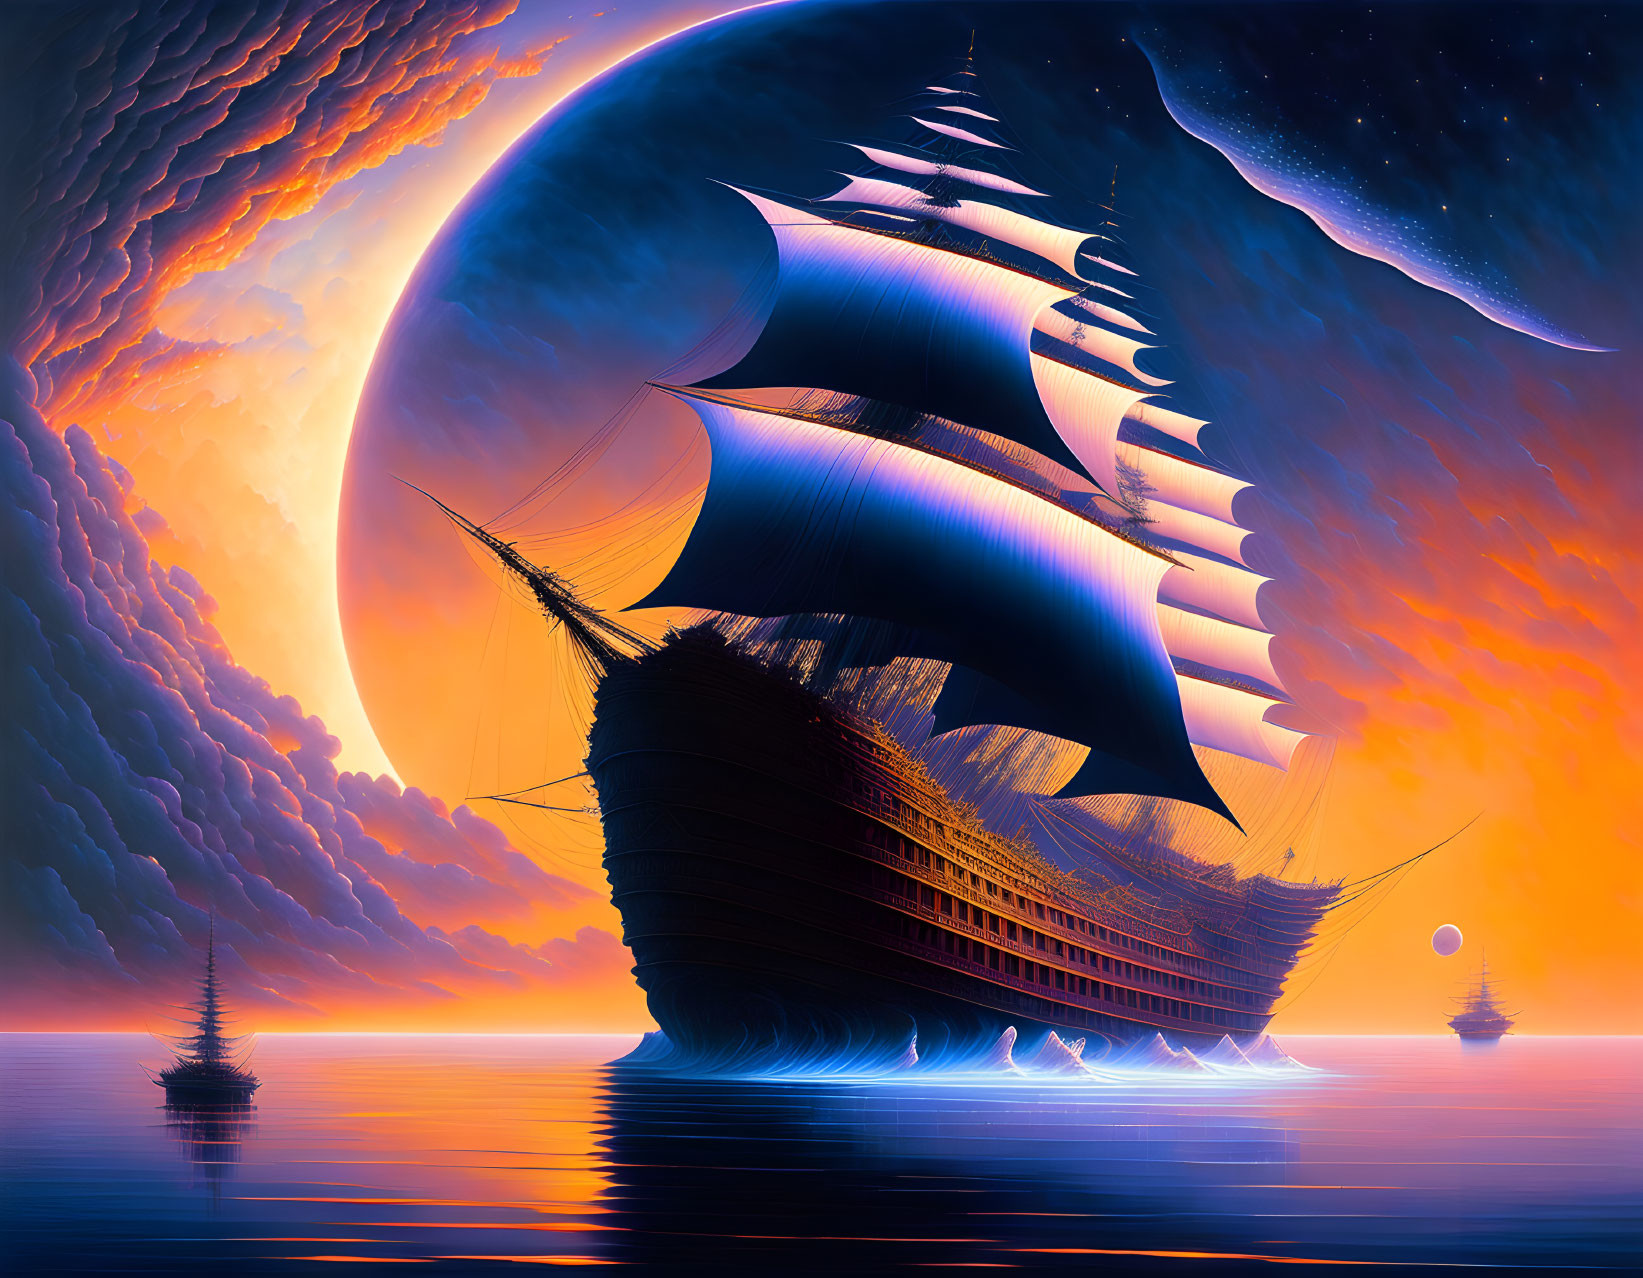 Surreal fantasy art of grand sailing ship under giant moon